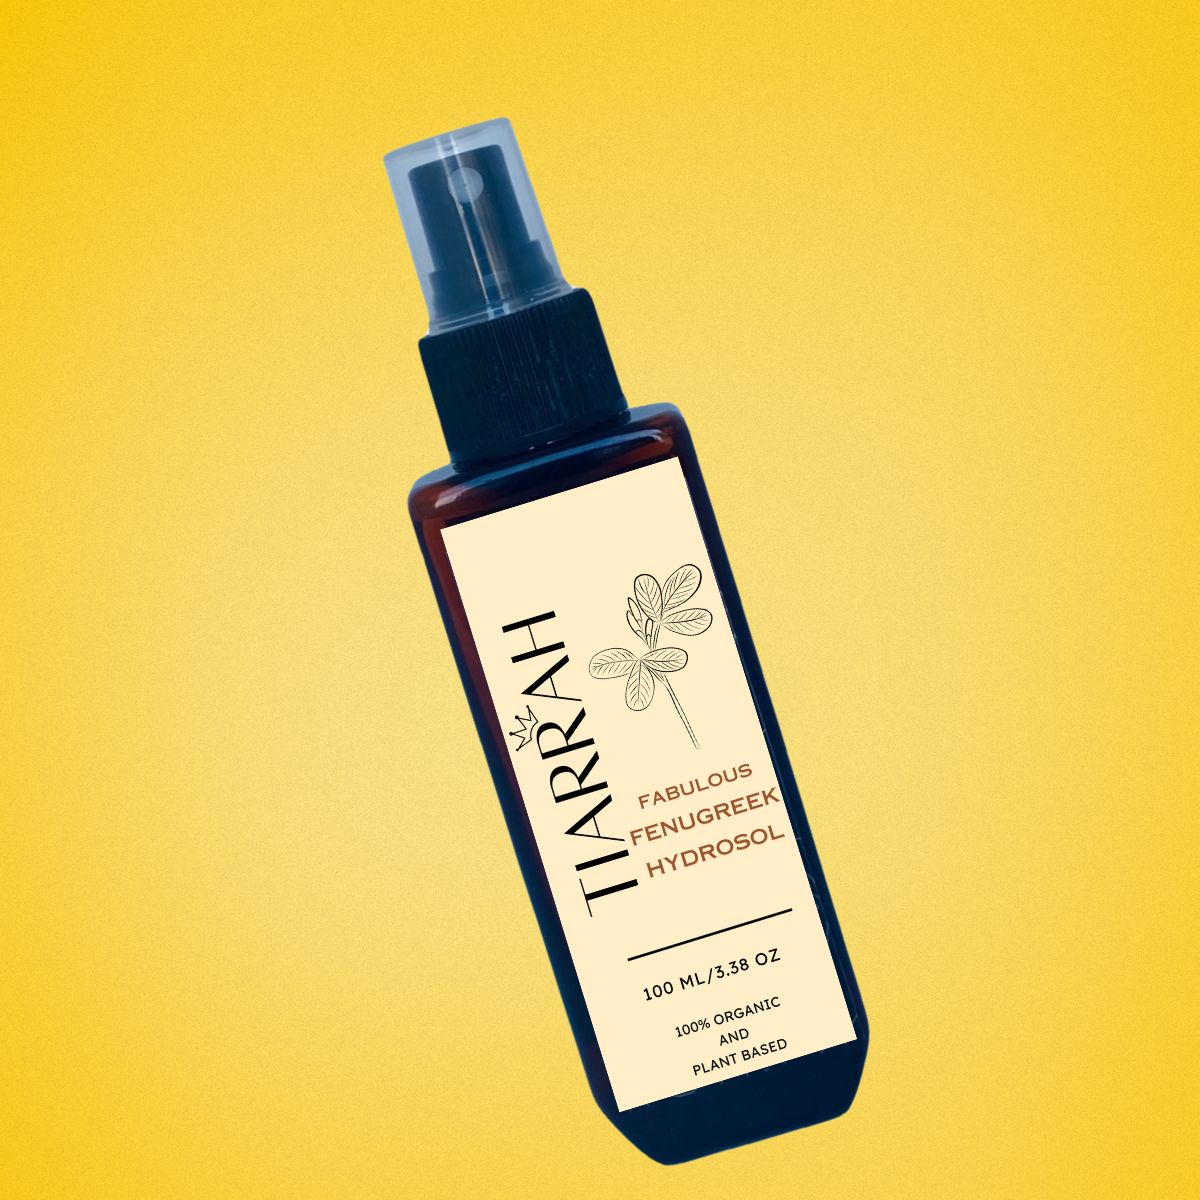 Luxury Fenugreek Hydrosol by Tiarrah: Organic, Non-Toxic Hair Mist - The Luxury Bath and Body Care Shop